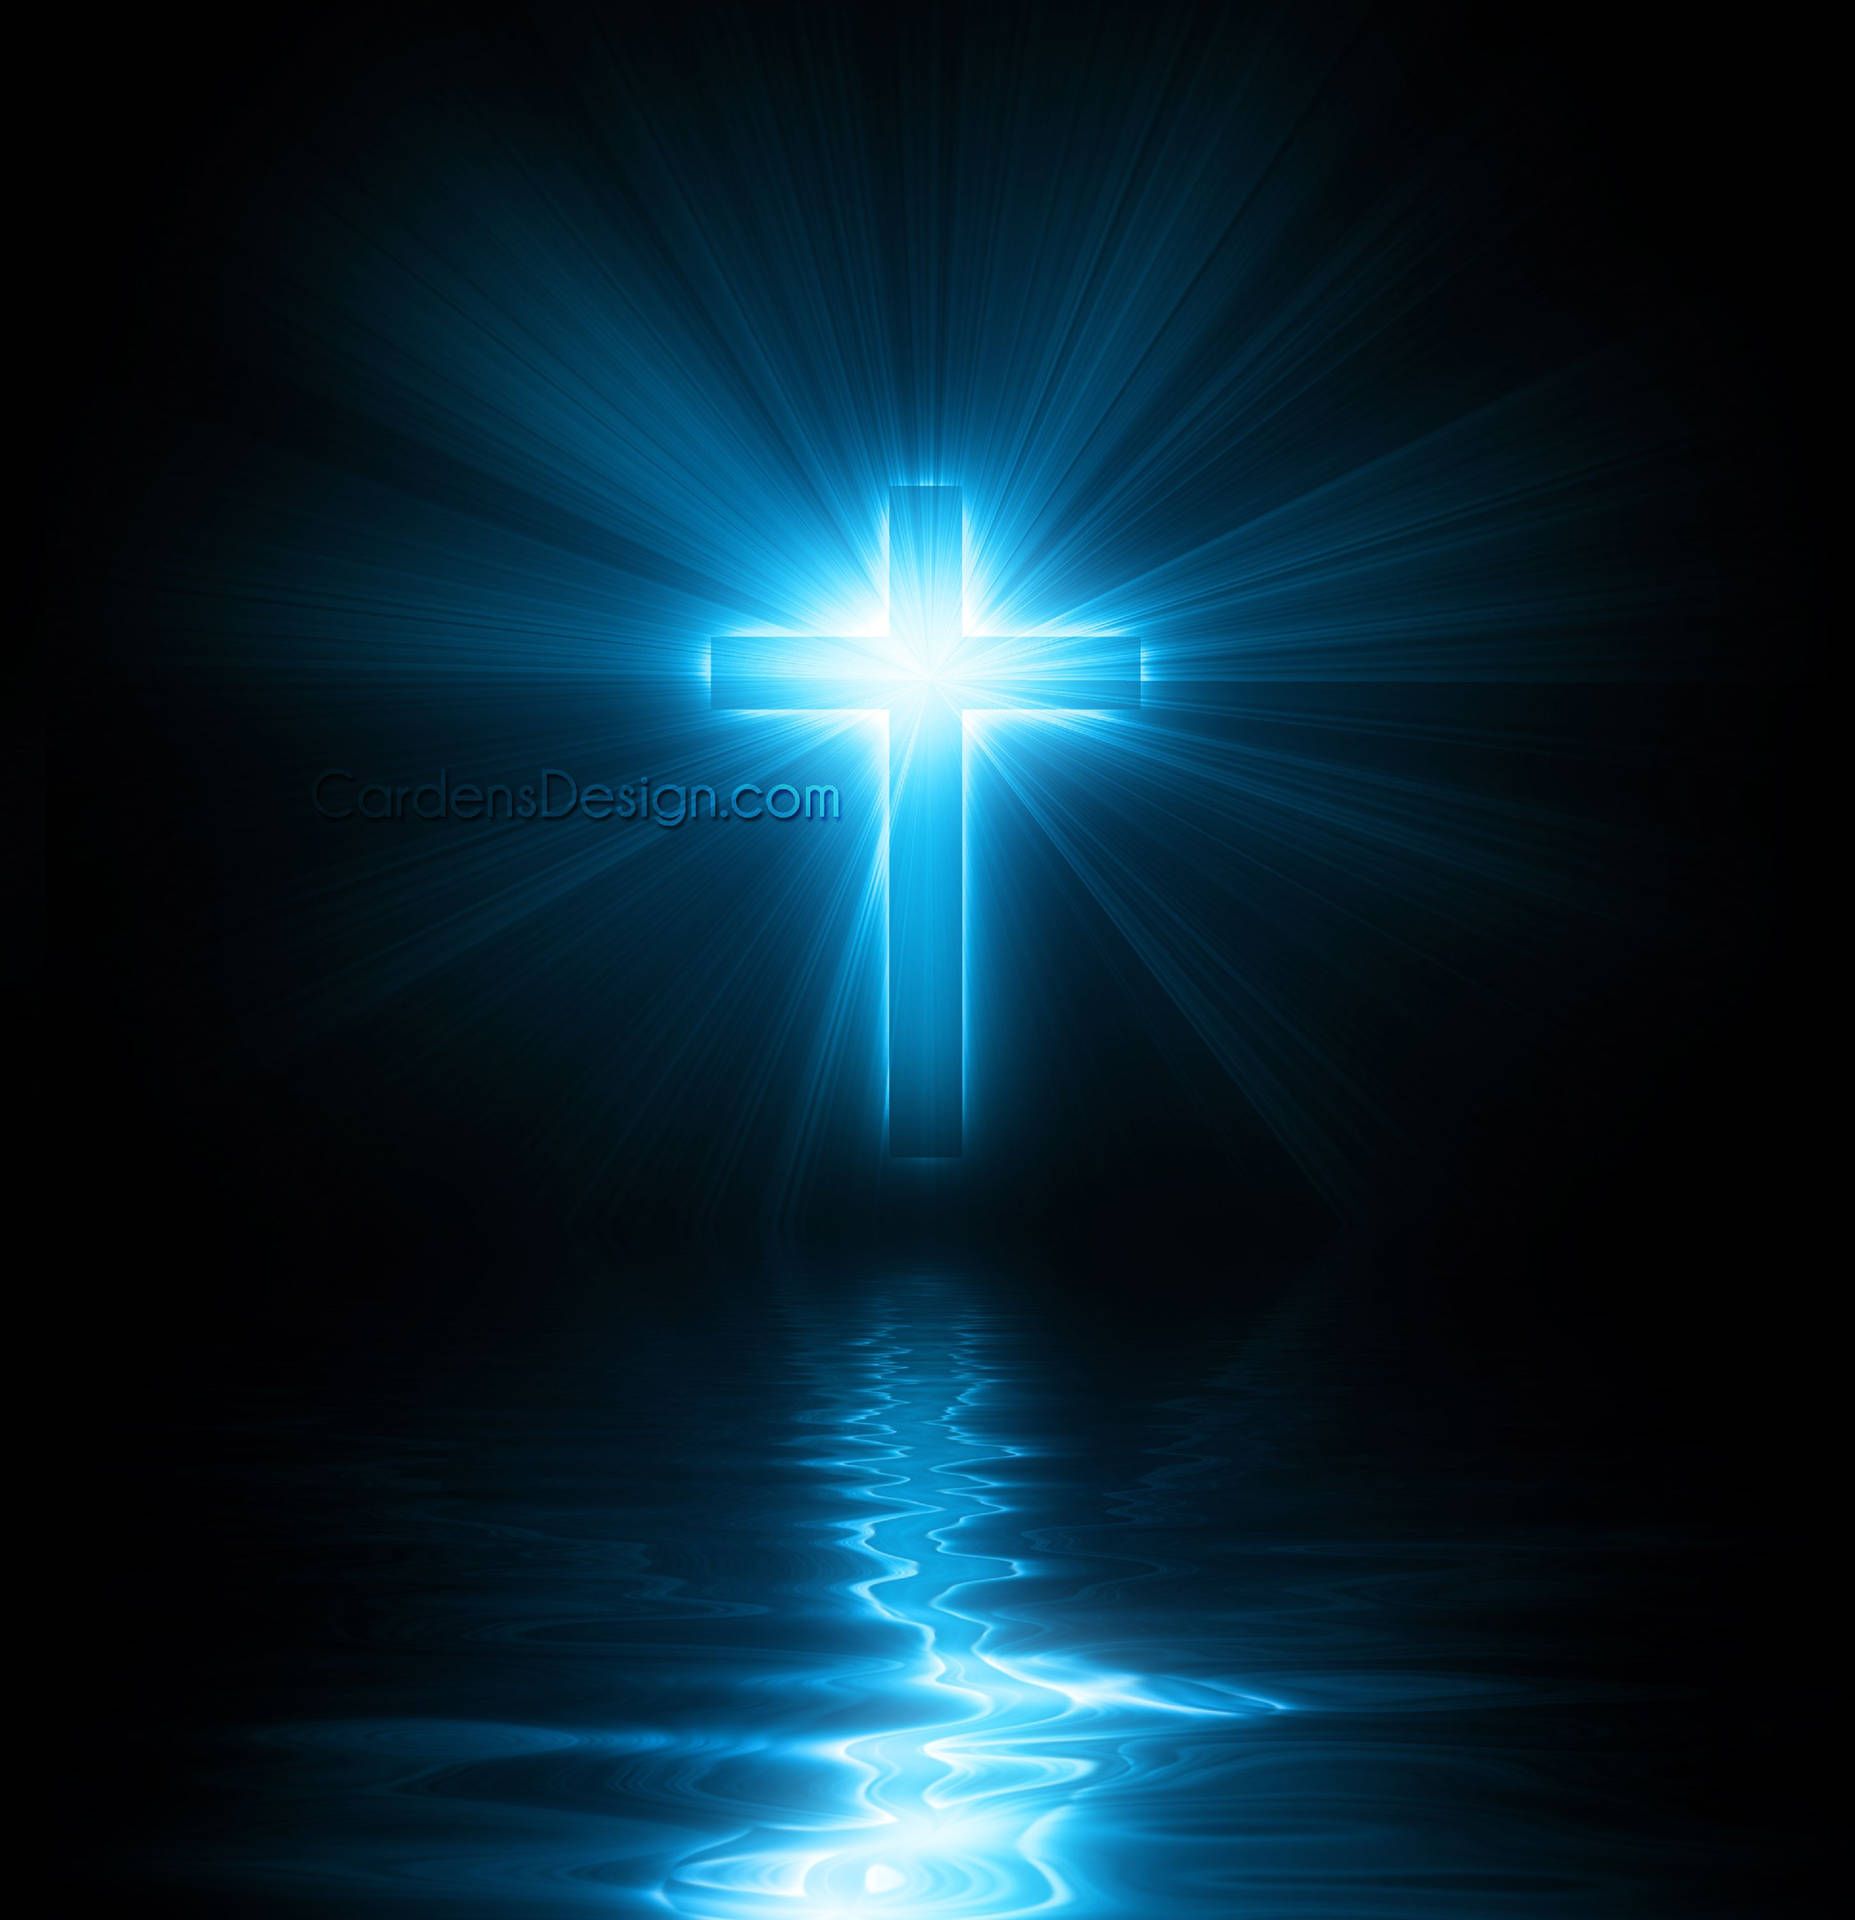 A cross shining brightly in the dark - Cross